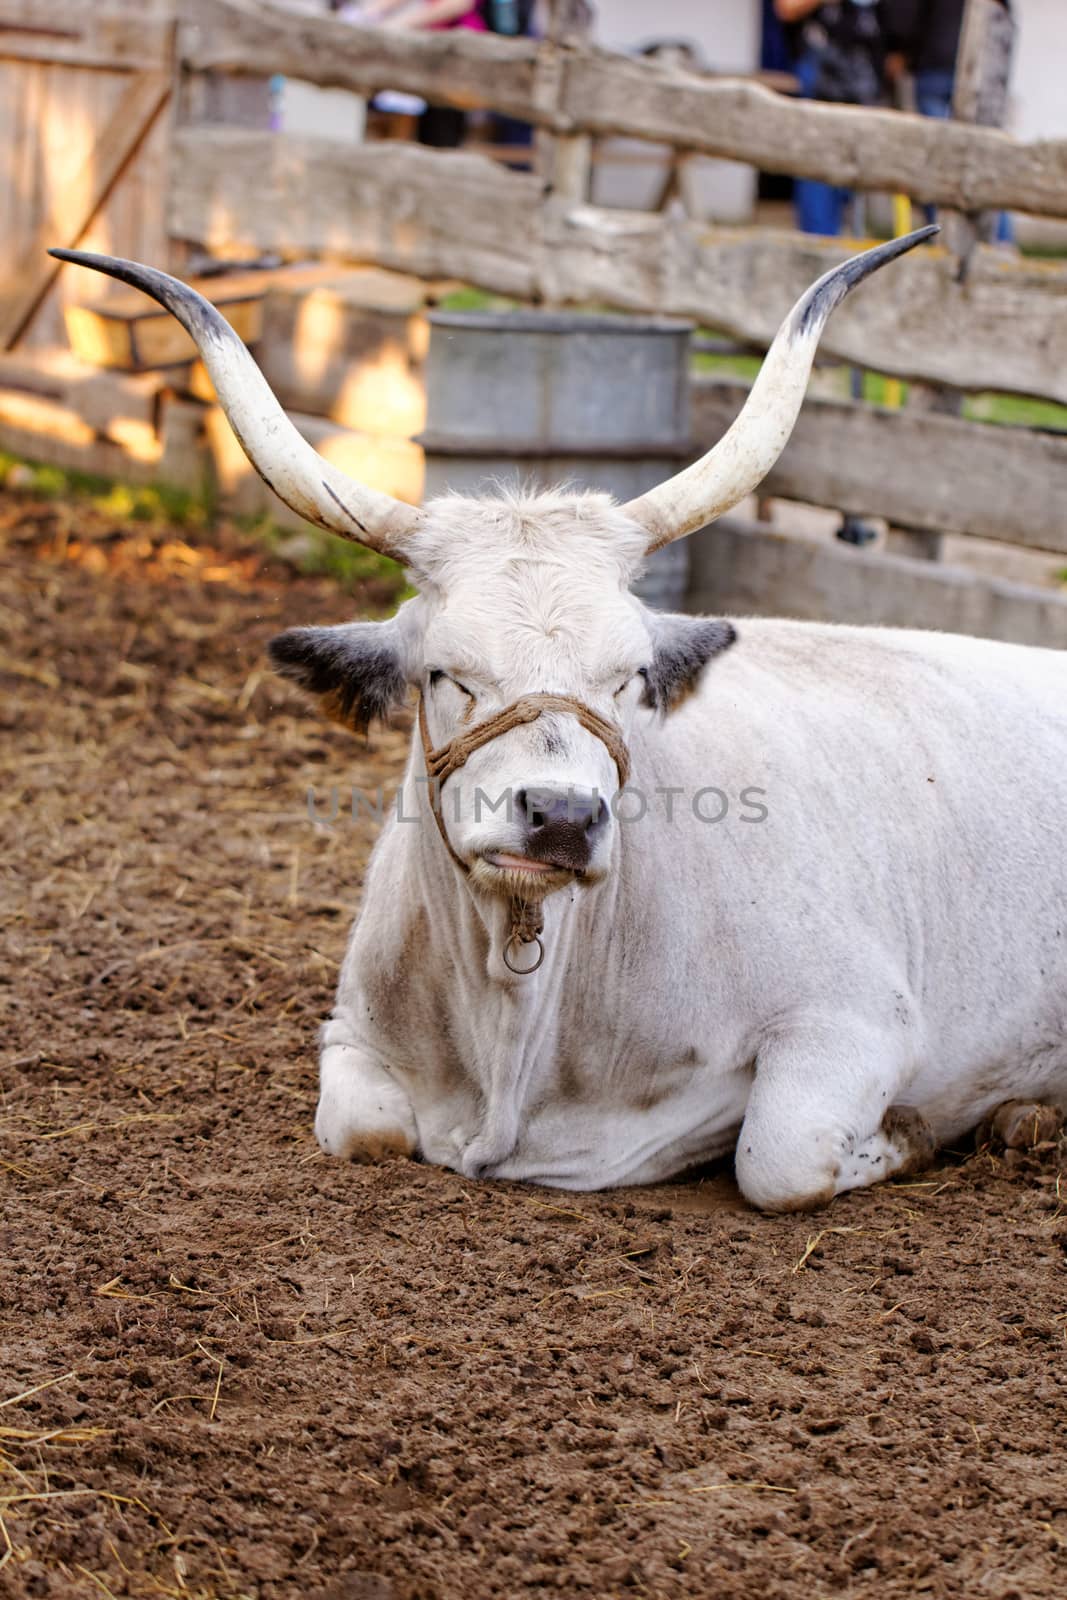 Hungarian grey cattle by NagyDodo